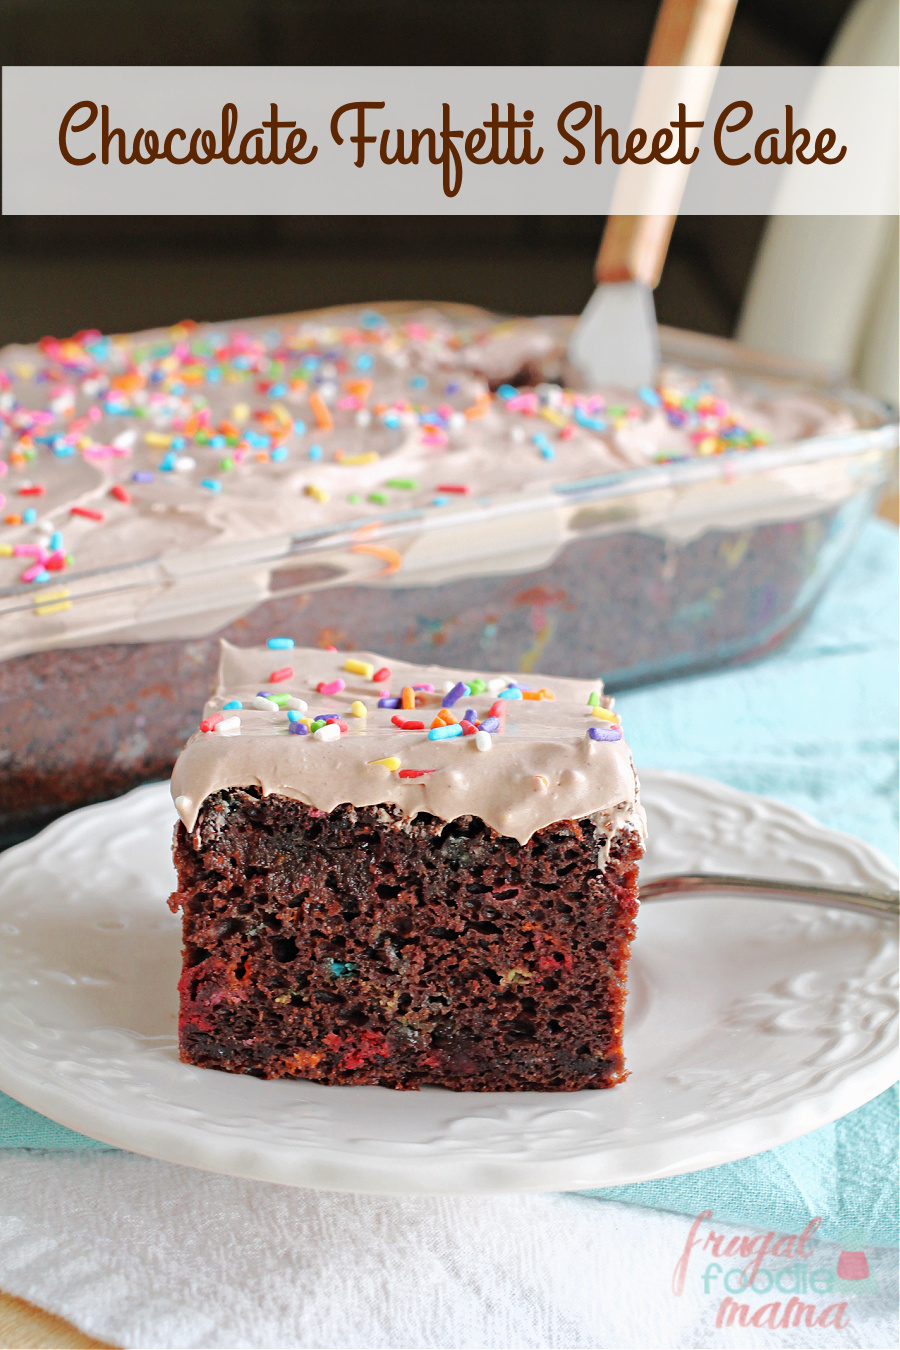 Chocolate cake - Wikipedia